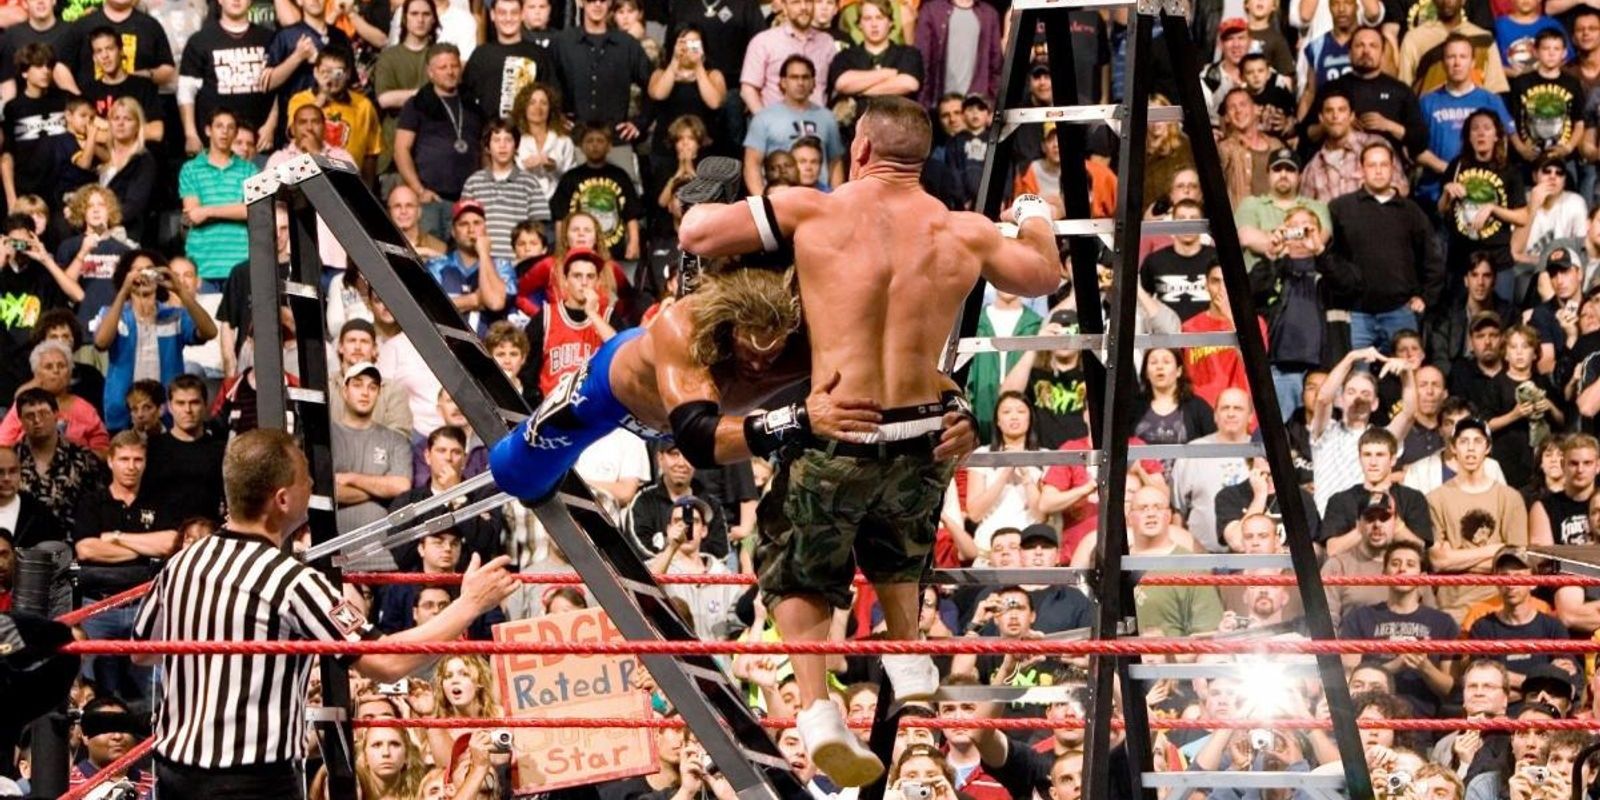 Edge's greatest rival is John Cena